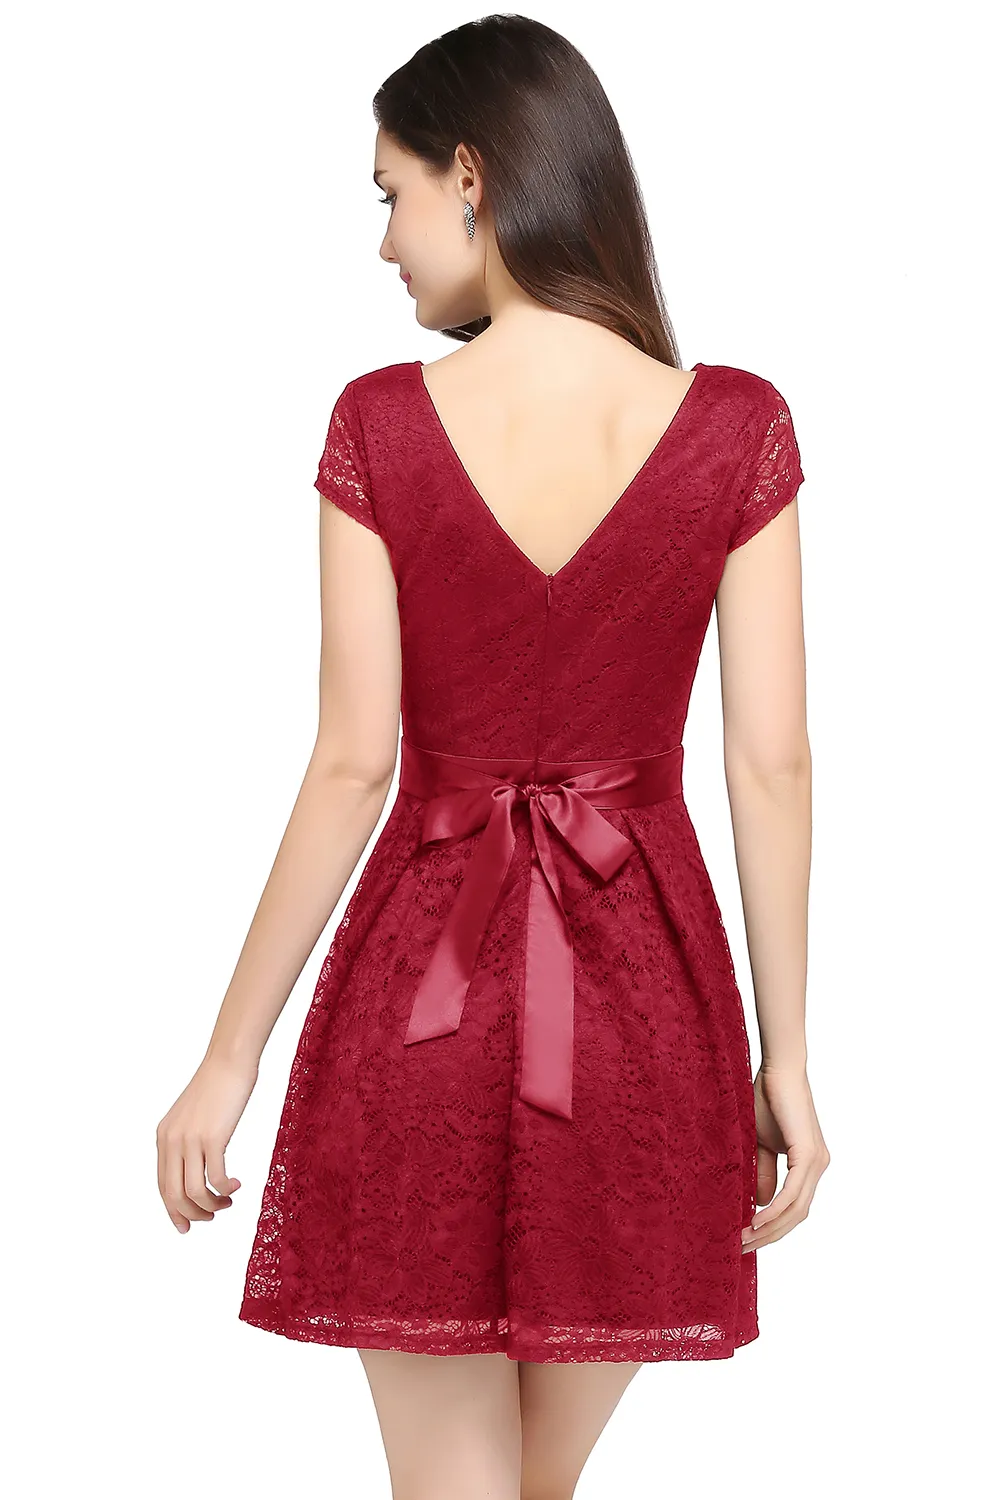 Lace Short Evening Dress robe de soiree A line Formal Dress Party vestidos Elegant Evening Gown For Women cps627